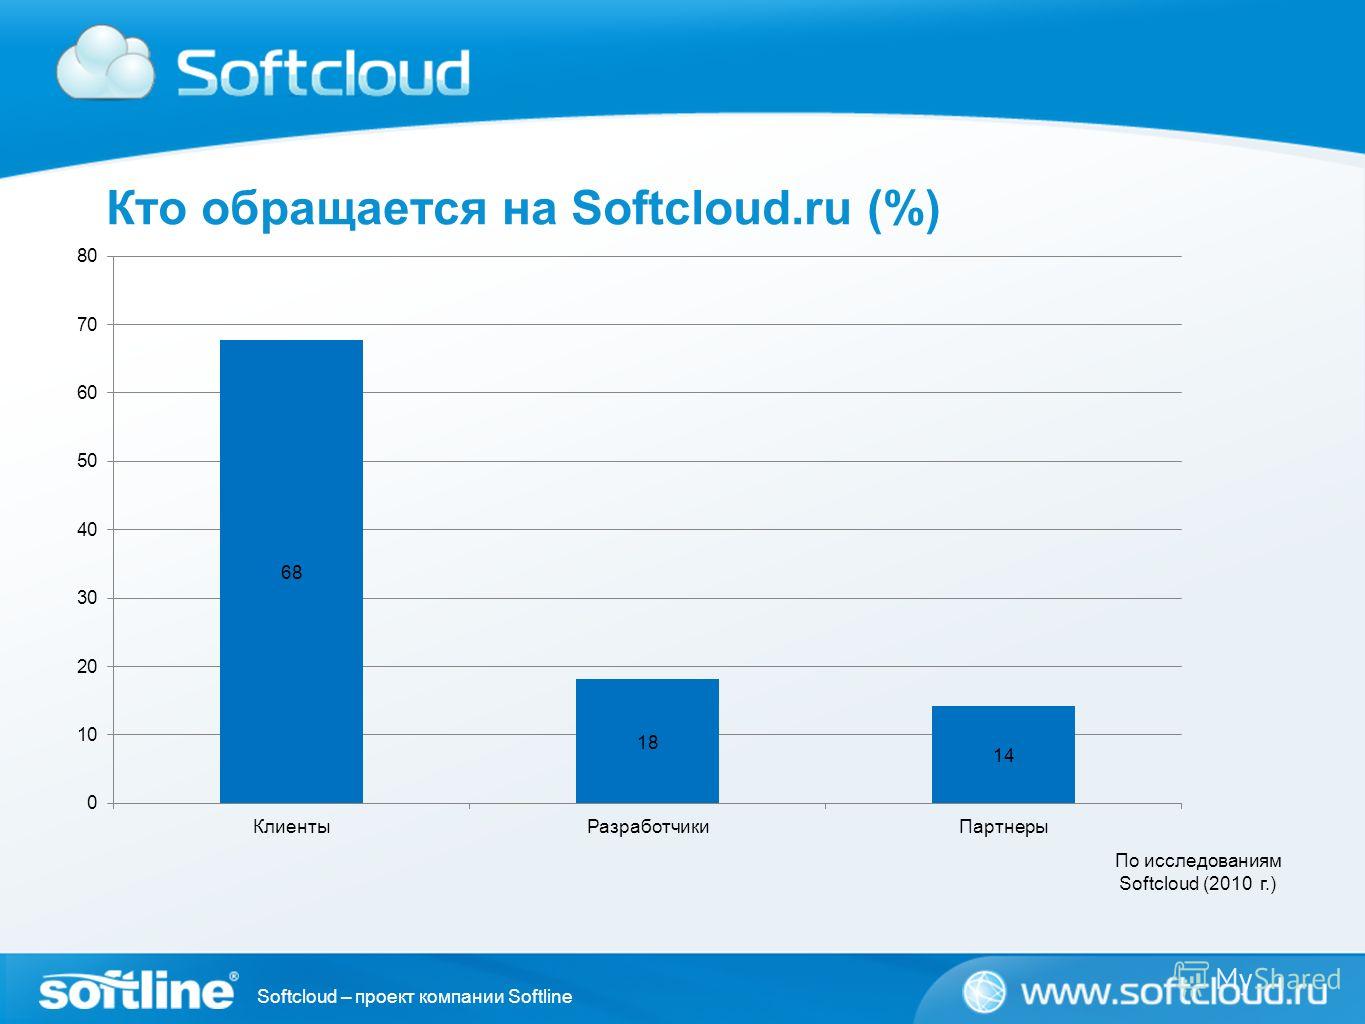 Softcloud – проект компании Softline Кто обращается на Softcloud.ru (%) По исследованиям Softcloud (2010 г.)